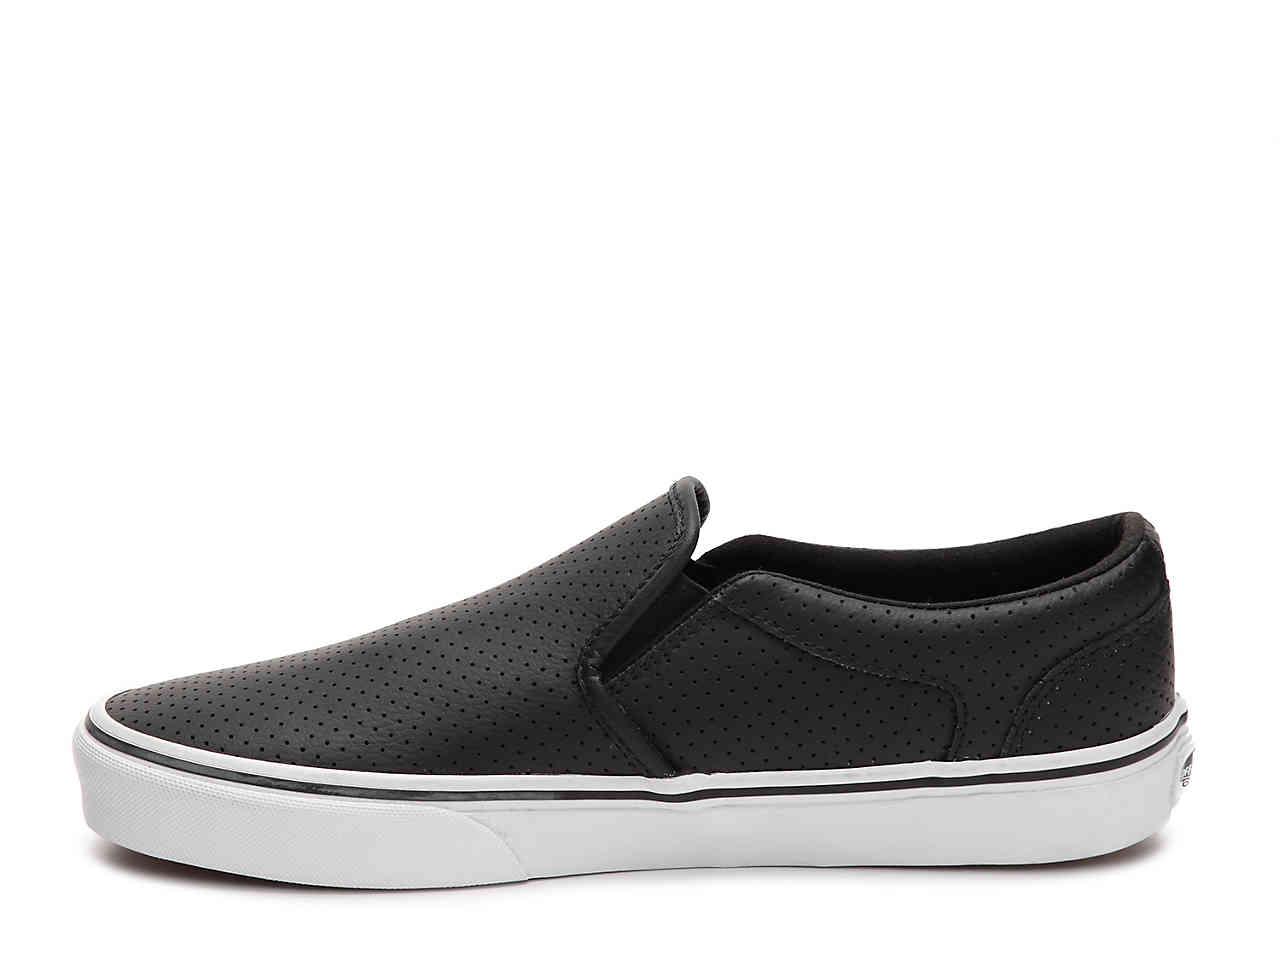 Vans Asher Perforated Leather Slip-on Sneaker in Black for Men - Lyst